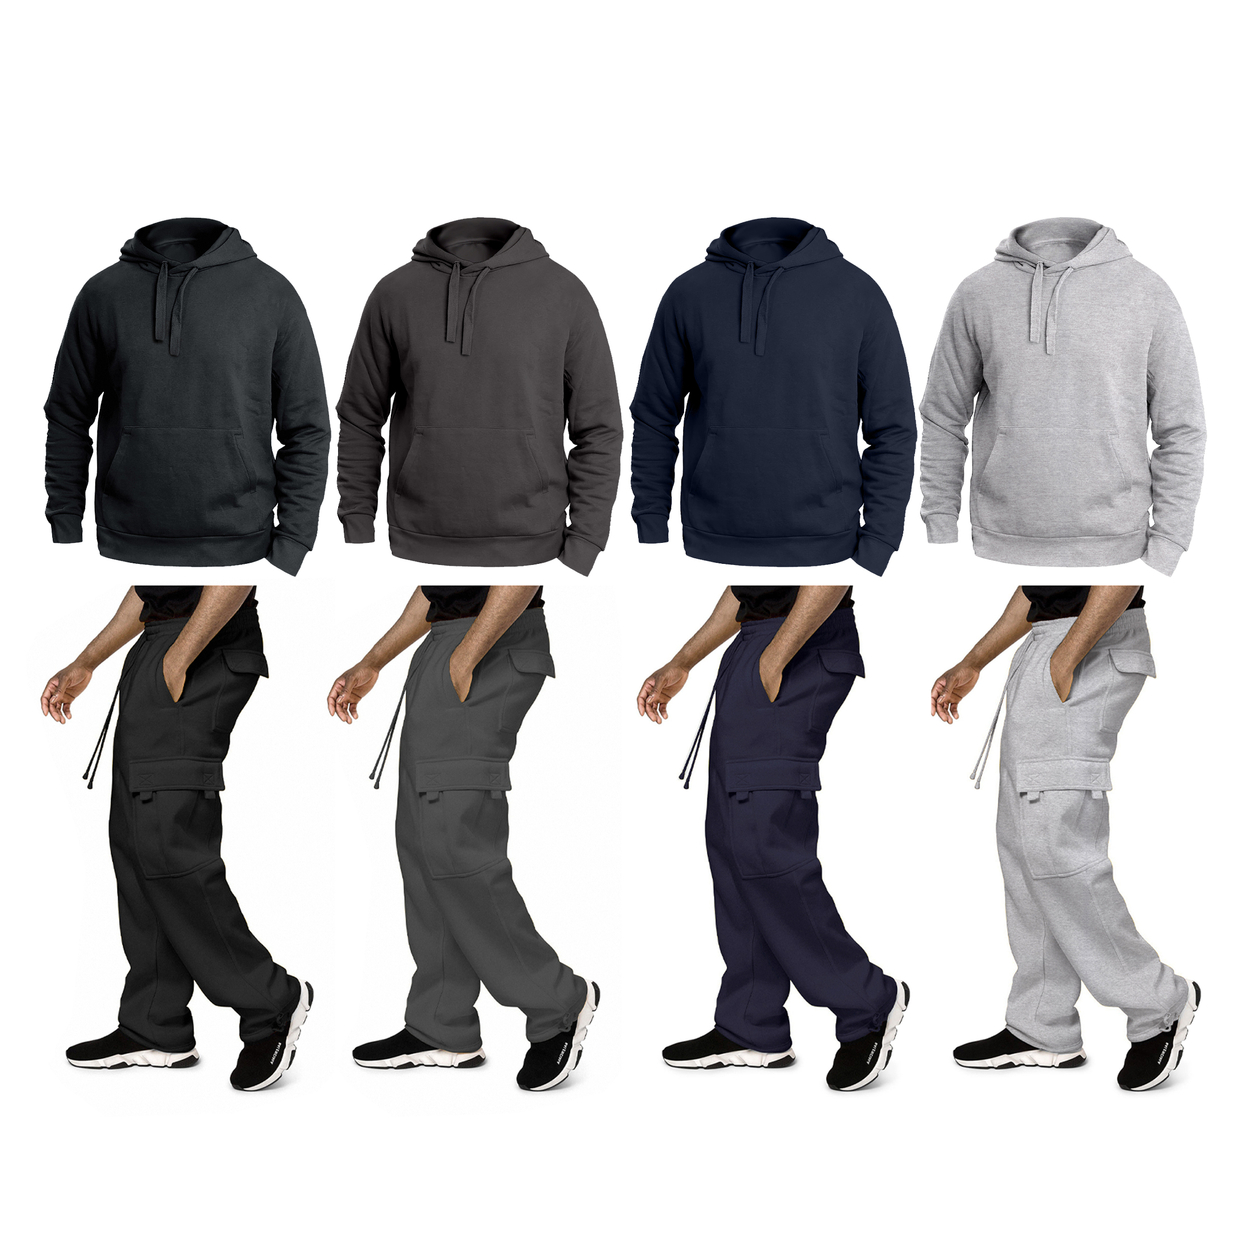 Multi-Pack: Big & Tall Men's Winter Warm Cozy Athletic Fleece Lined Multi-Pocket Cargo Sweatsuit - Black, 1-pack, Medium